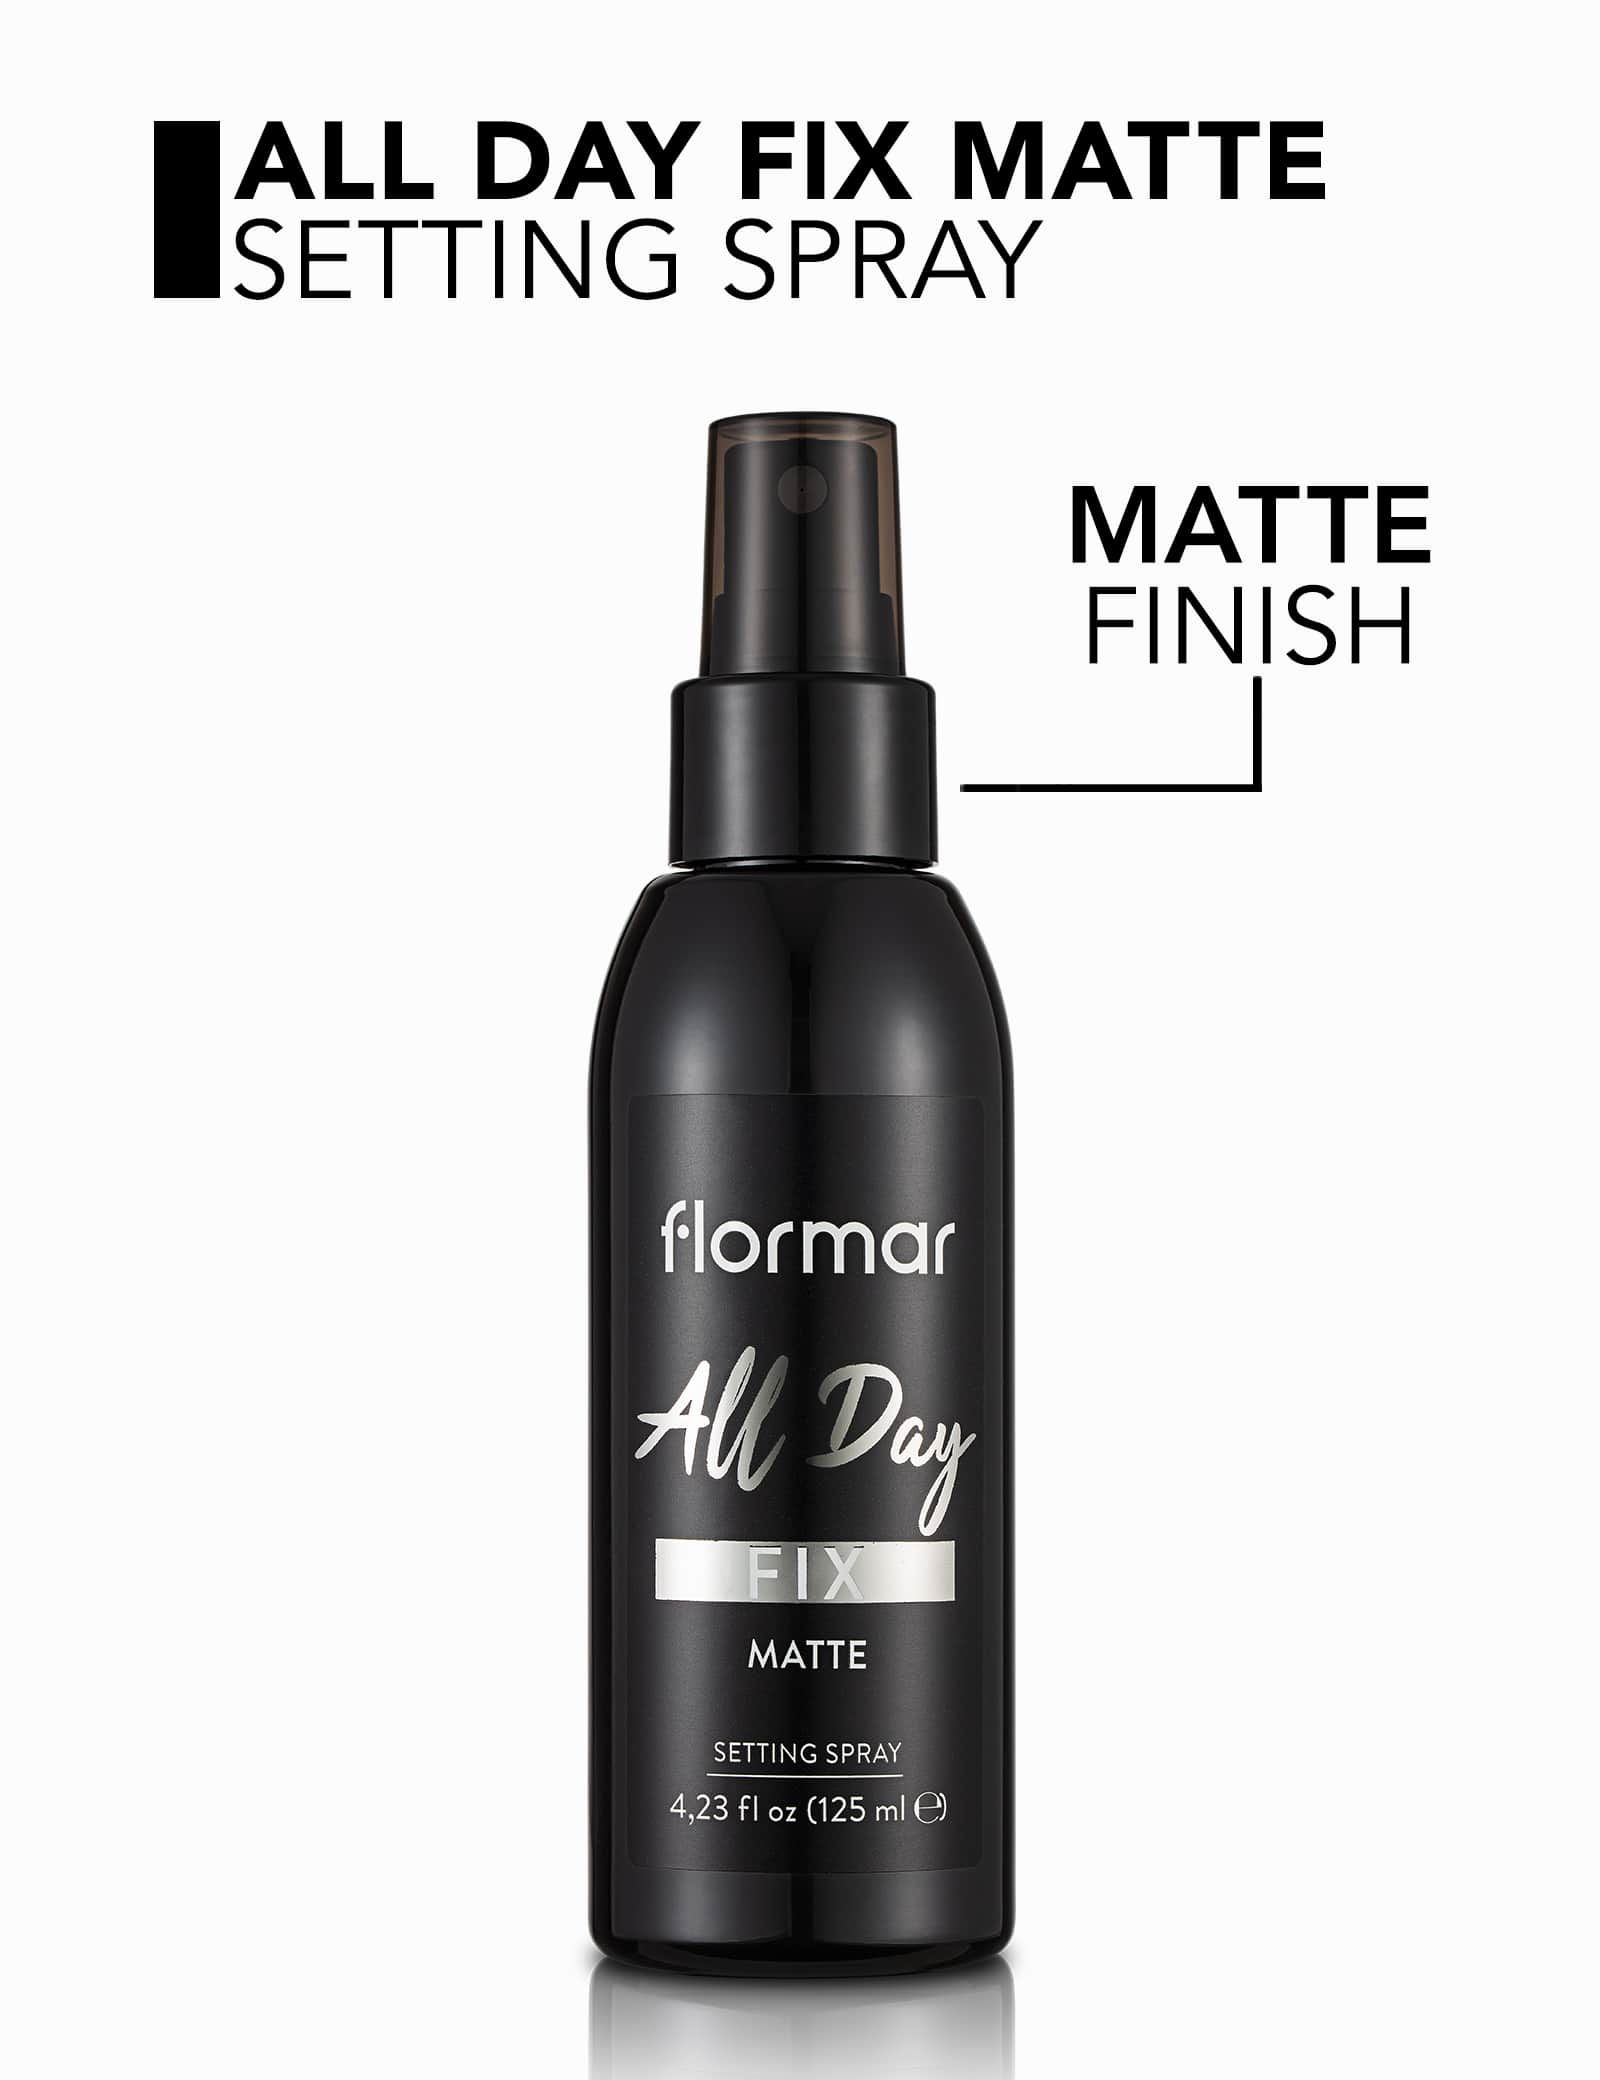 All Day Fix Matte Setting Spray